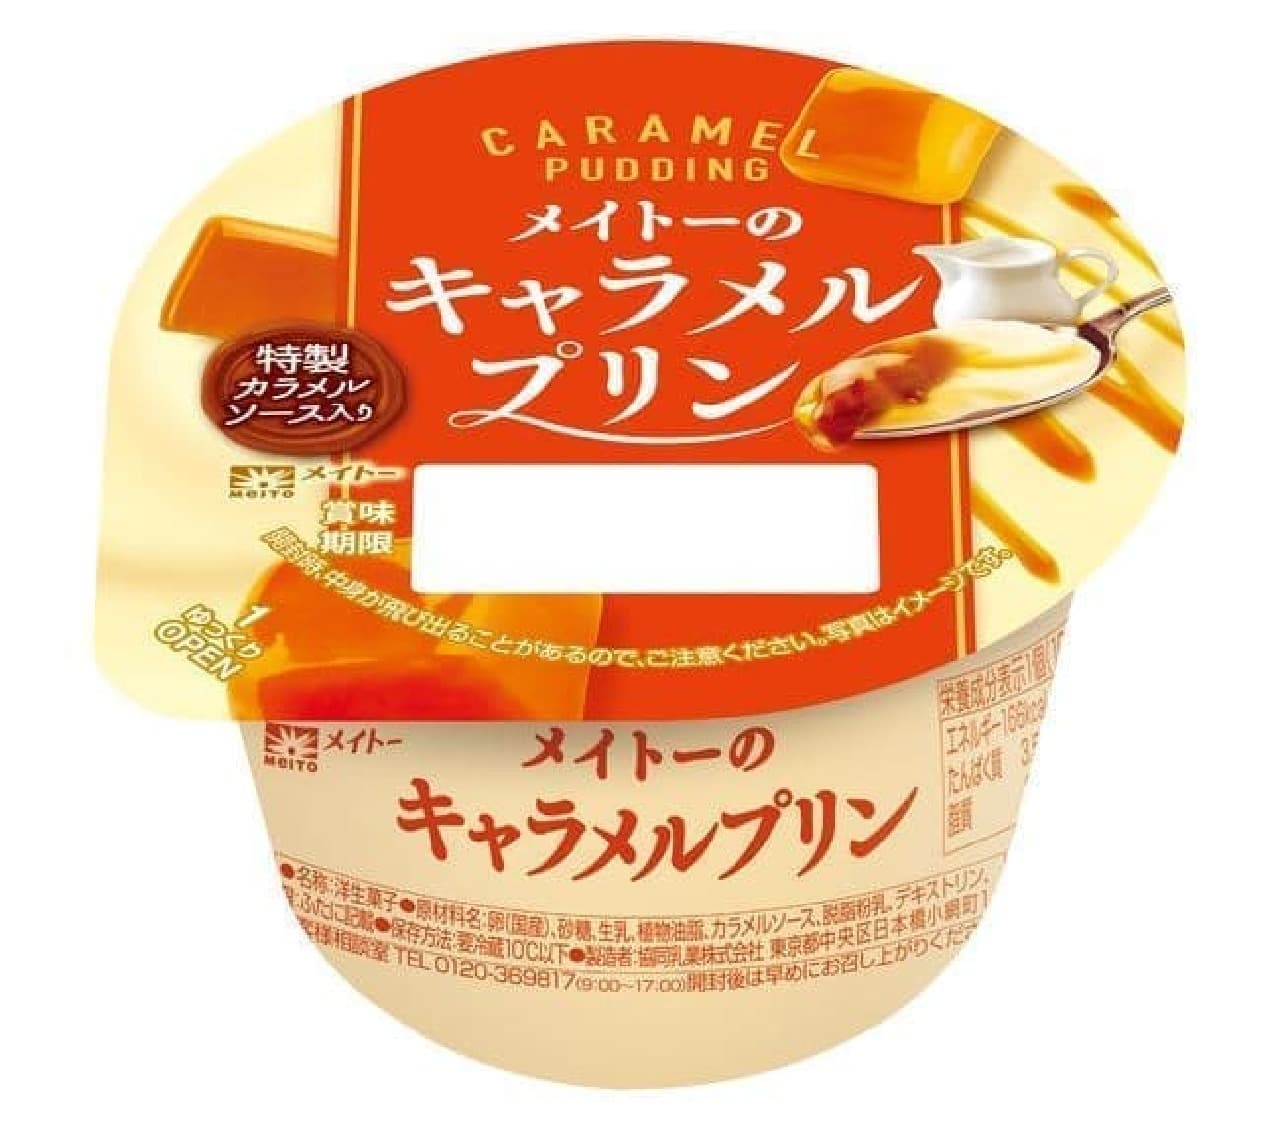 Meito's caramel pudding